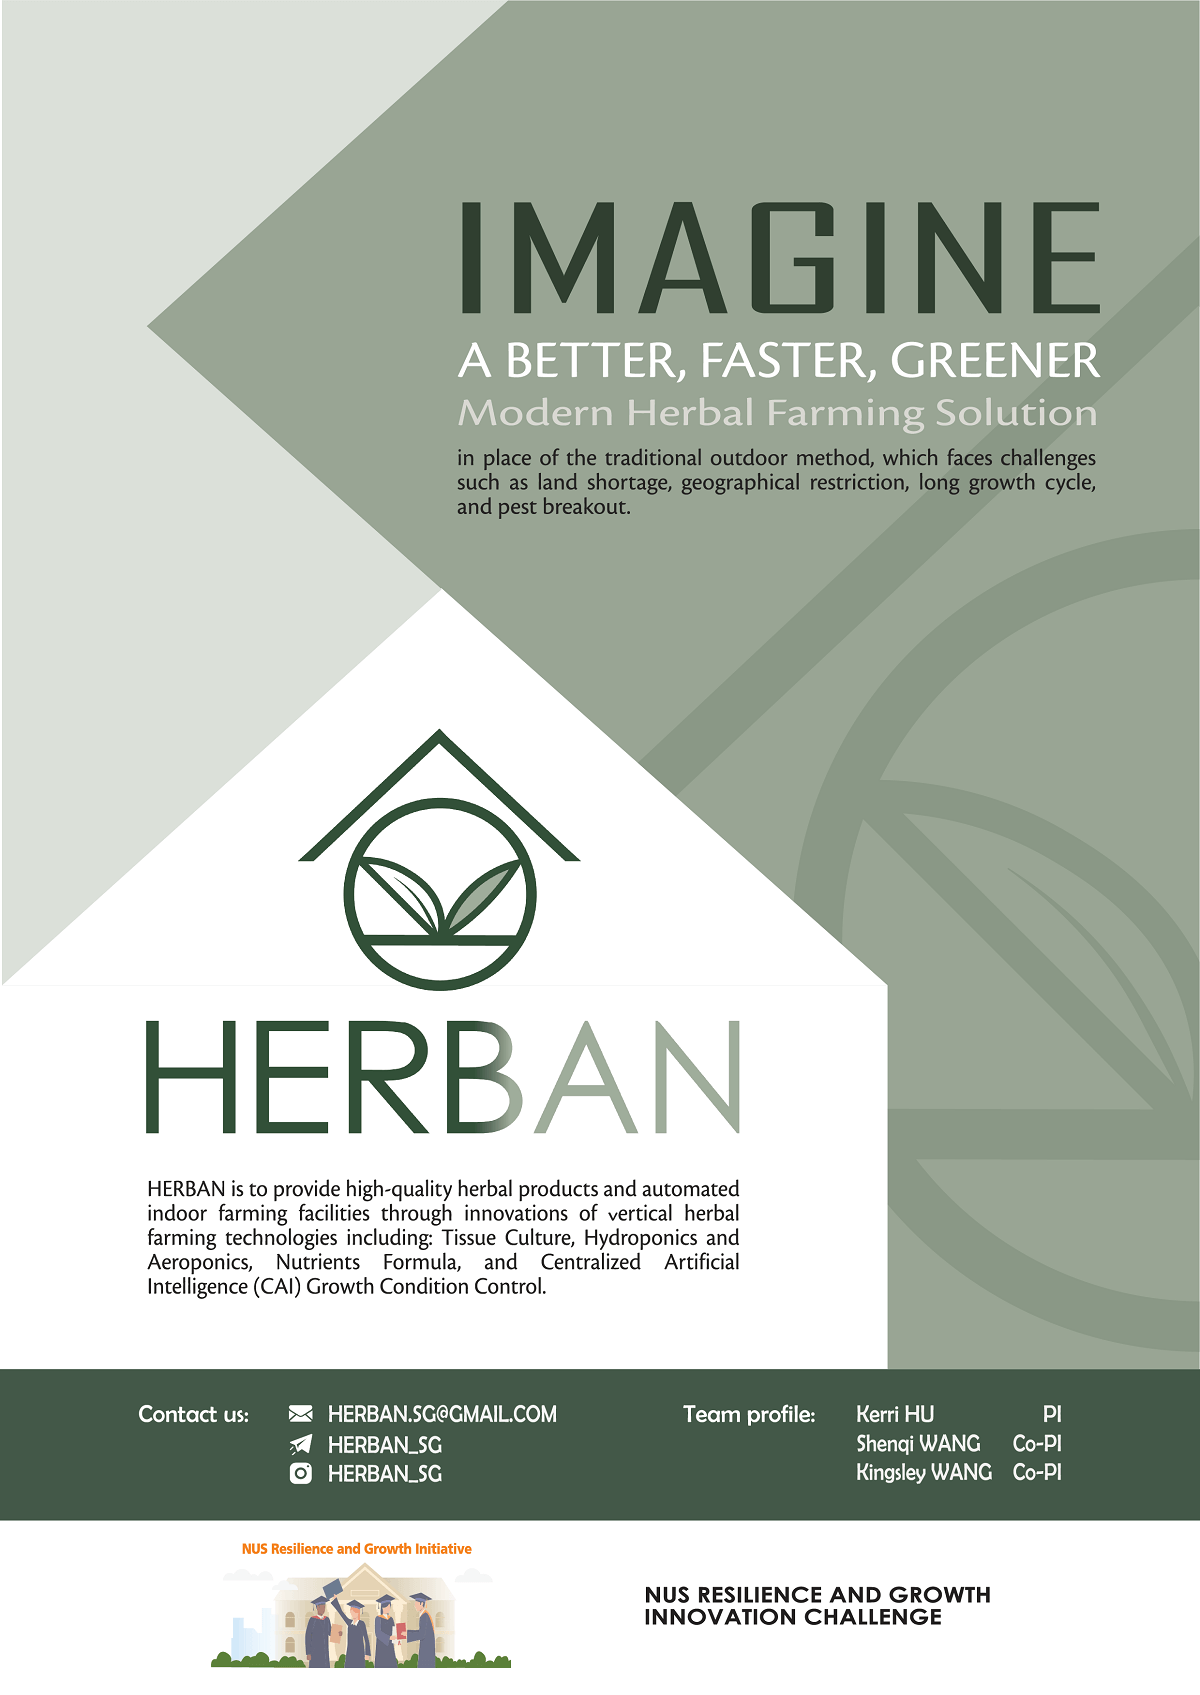 RG096 - HERBAN